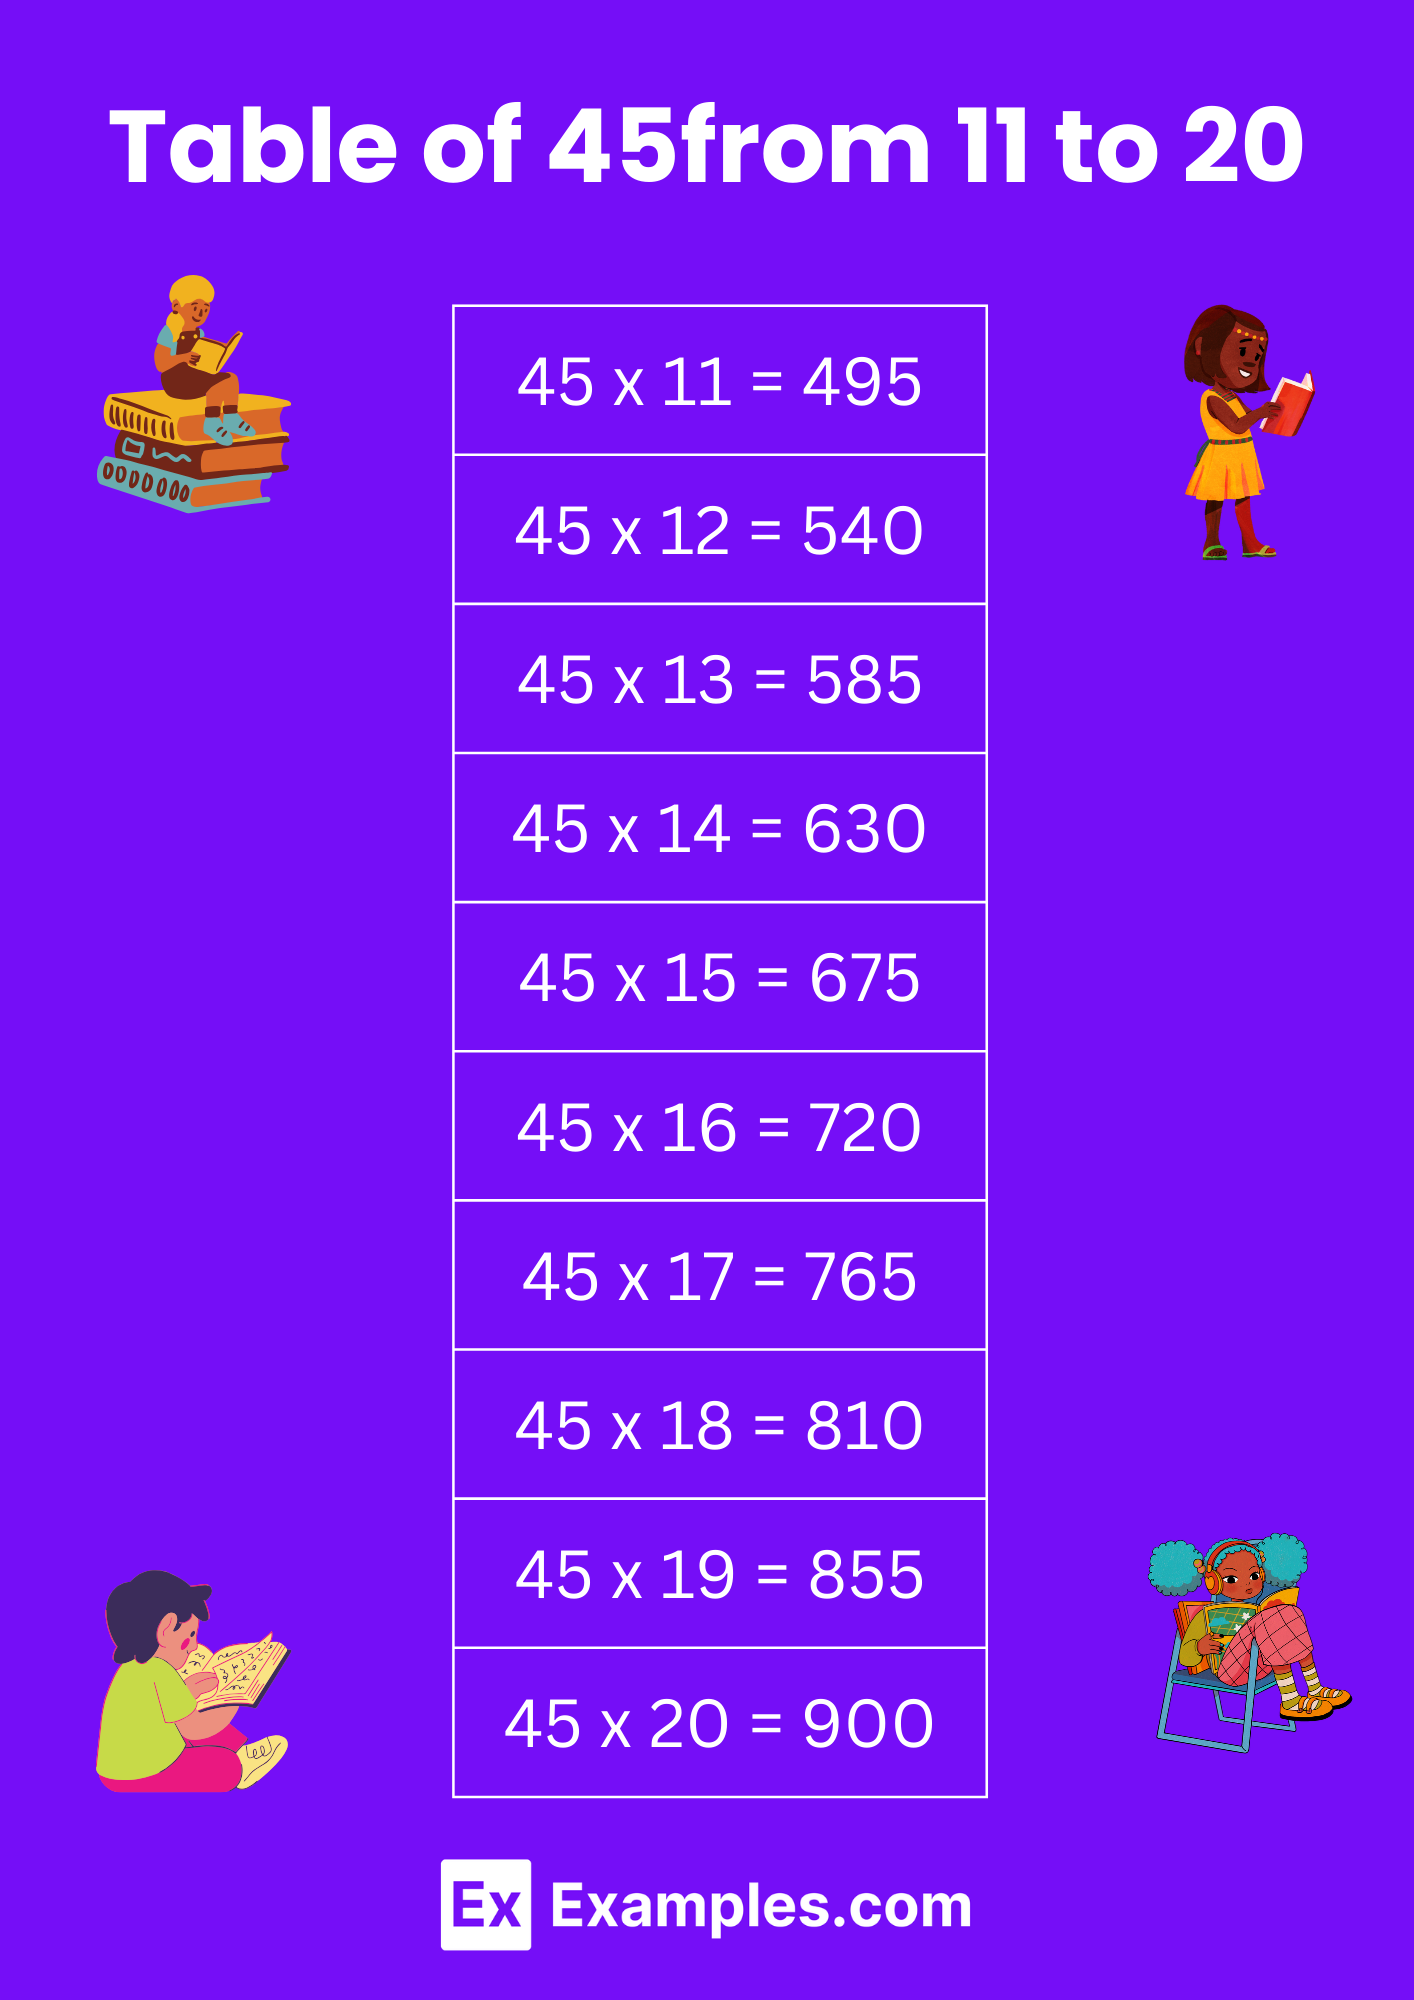 2 times table multiplication practice worksheet